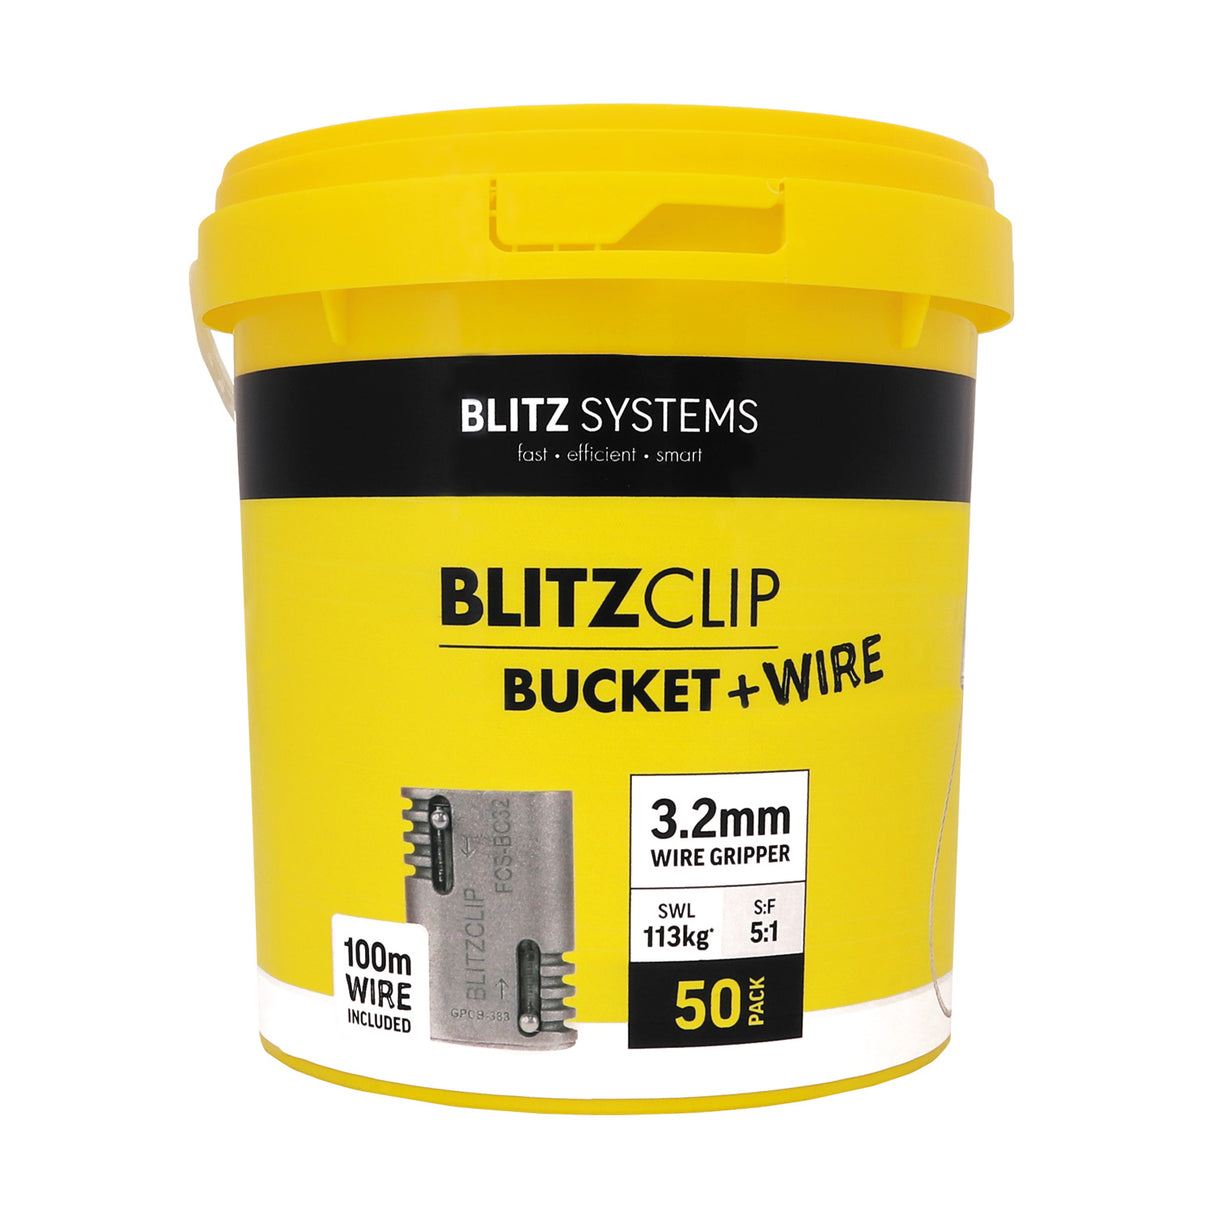 BLITZCLIP Bucket - 3.2mm Wire Gripper x 50 Pcs + Wire 3.2x100M